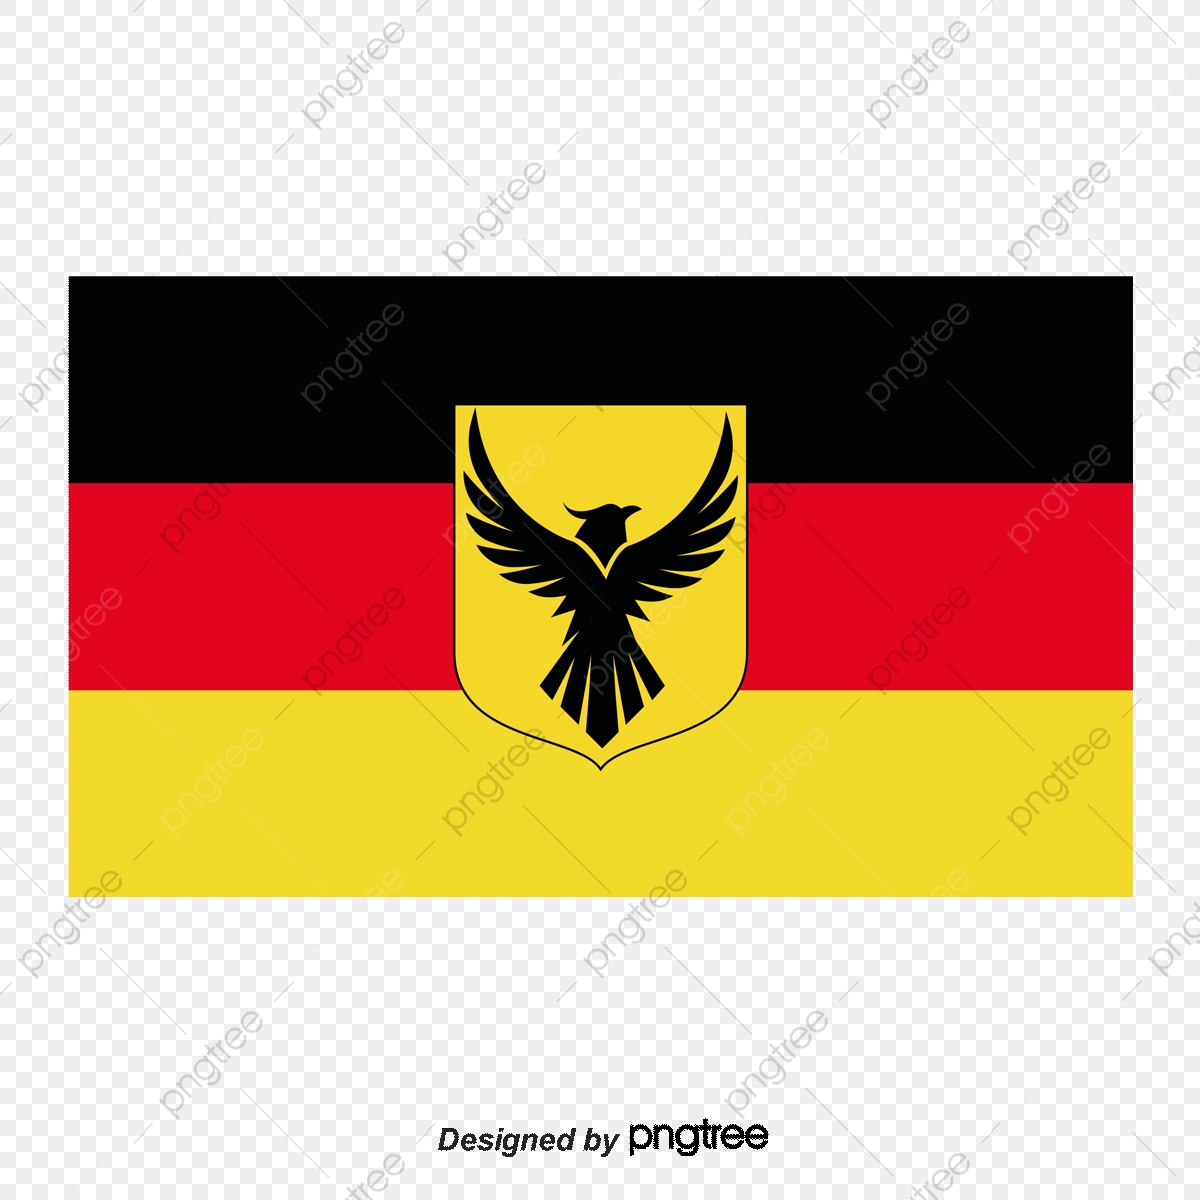 pngtree-vector-logo-germany-png-image_155988.jpg